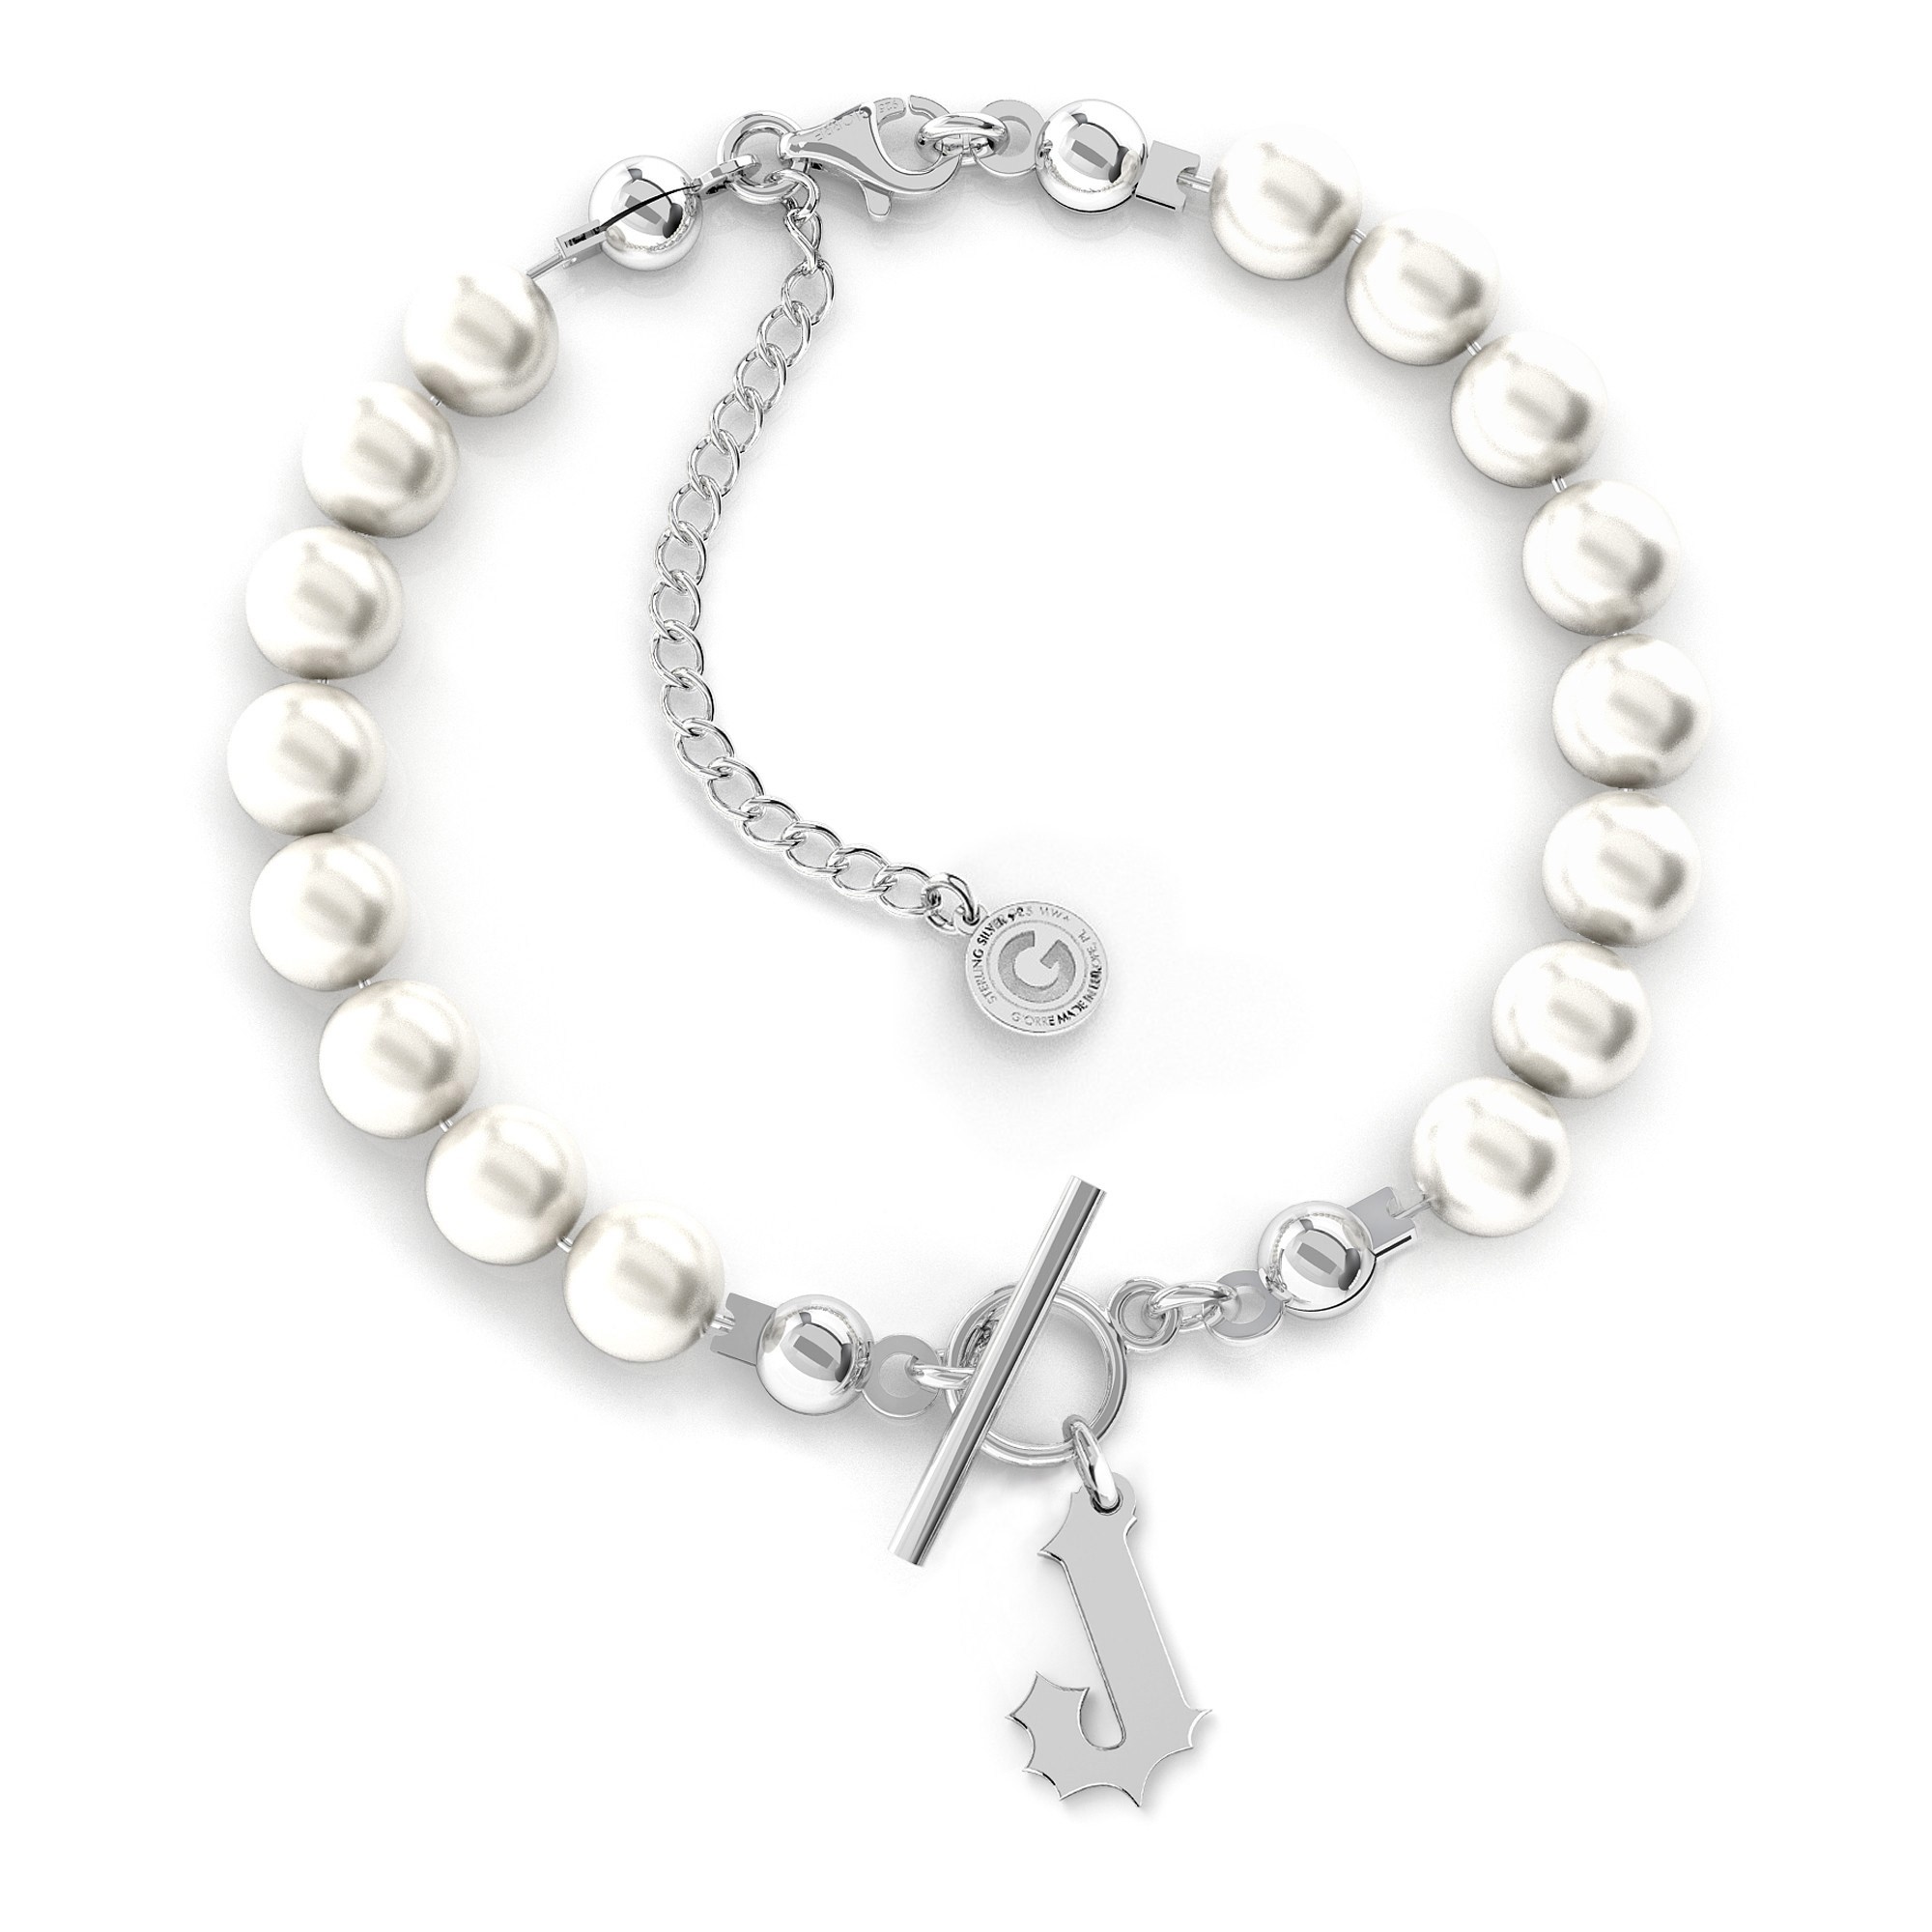 Perlen armband mit brief T°ra'vel'' sterling silber 925